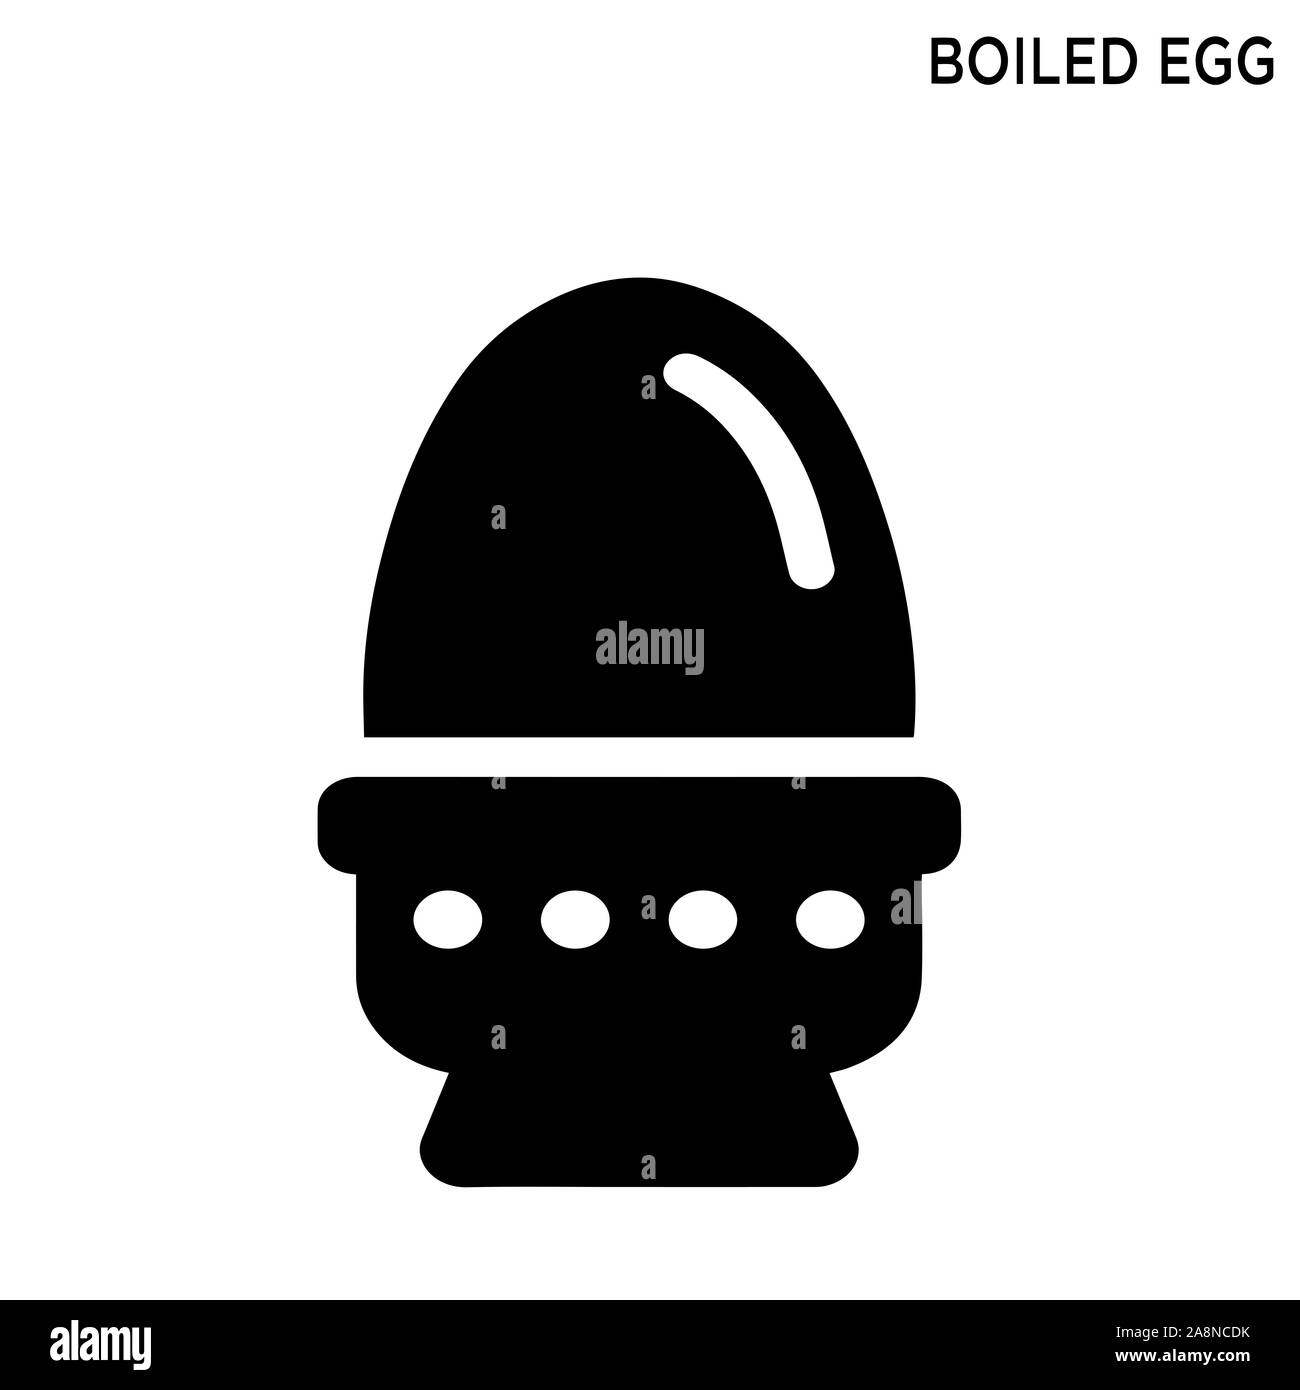 Egg boiled icon food concept symbol design Stock Photo